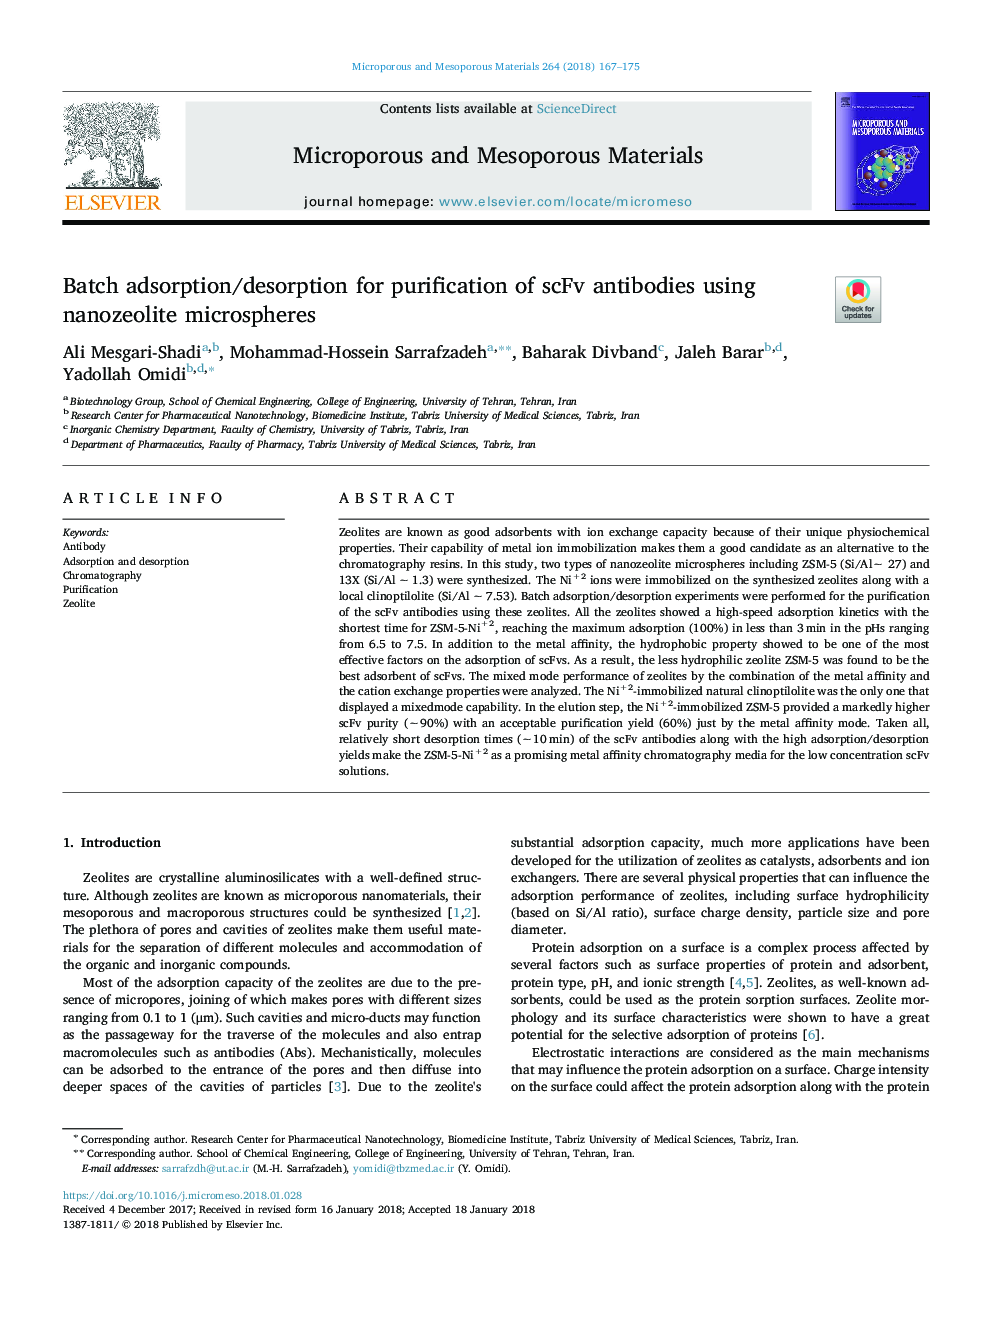 Batch adsorption/desorption for purification of scFv antibodies using nanozeolite microspheres